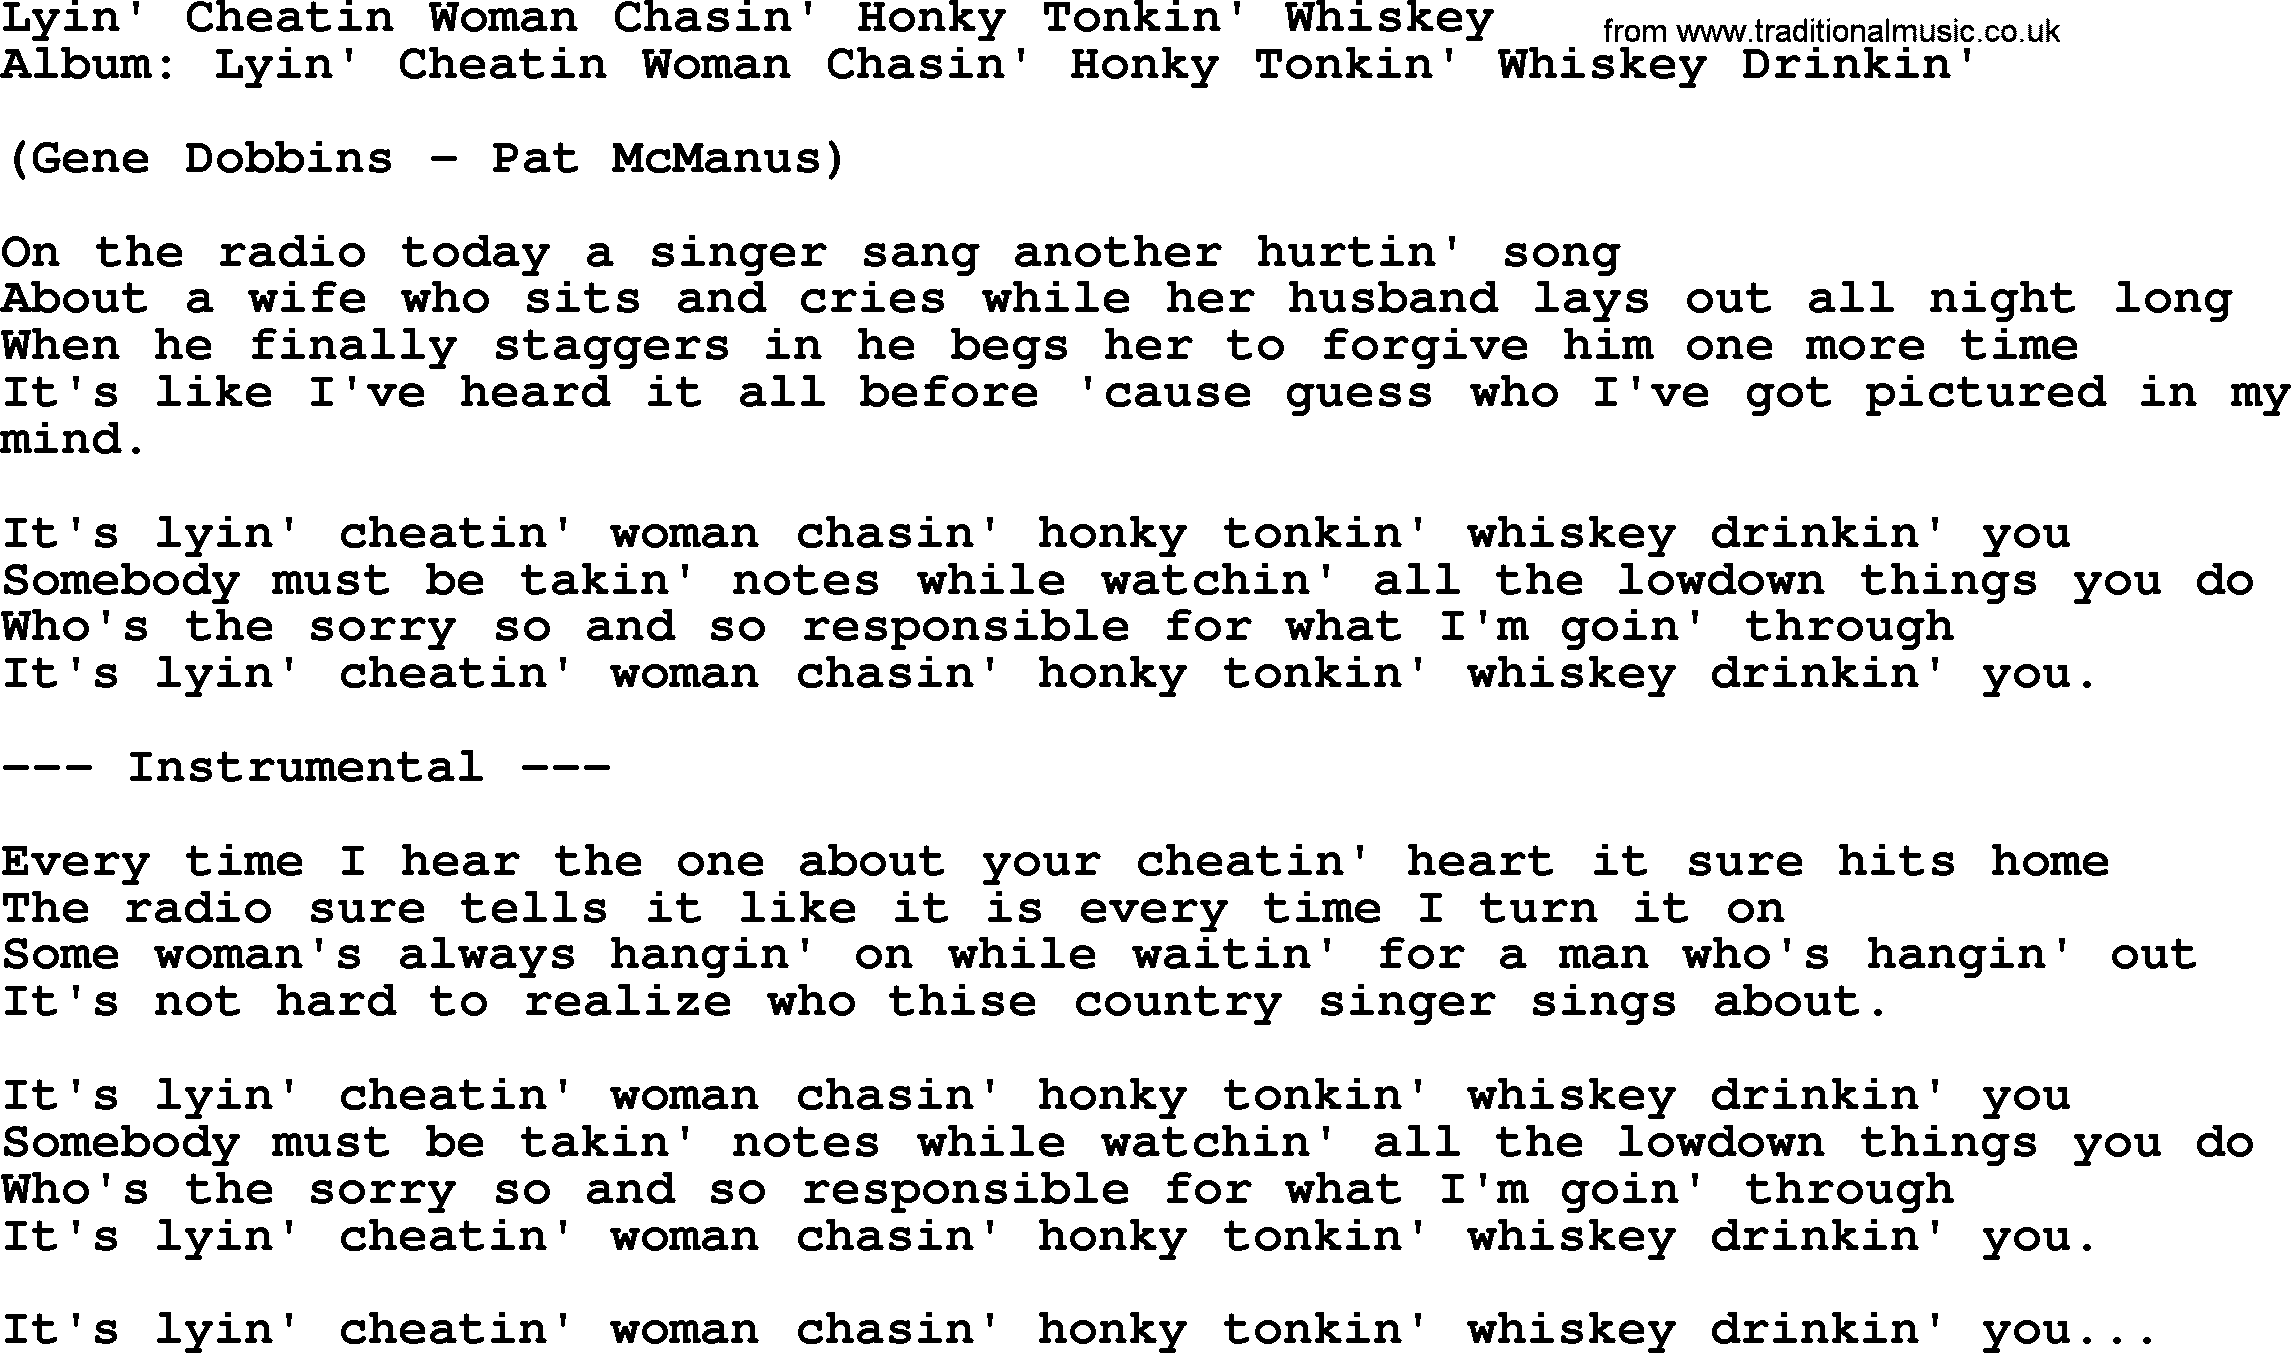 Loretta Lynn song: Lyin' Cheatin Woman Chasin' Honky Tonkin' Whiskey lyrics